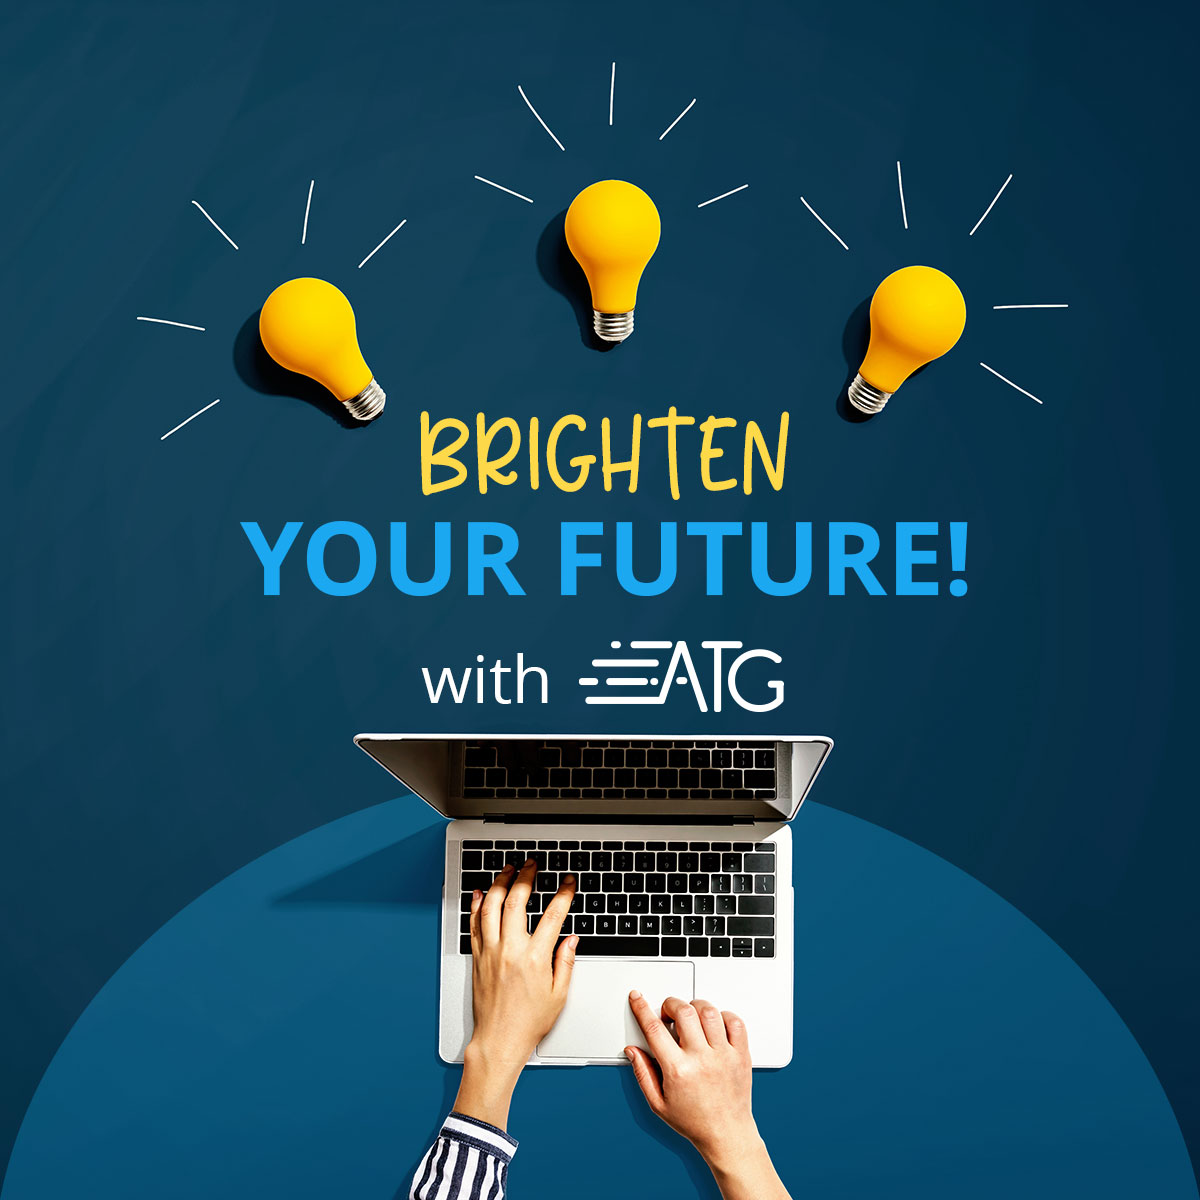 Brighten your future